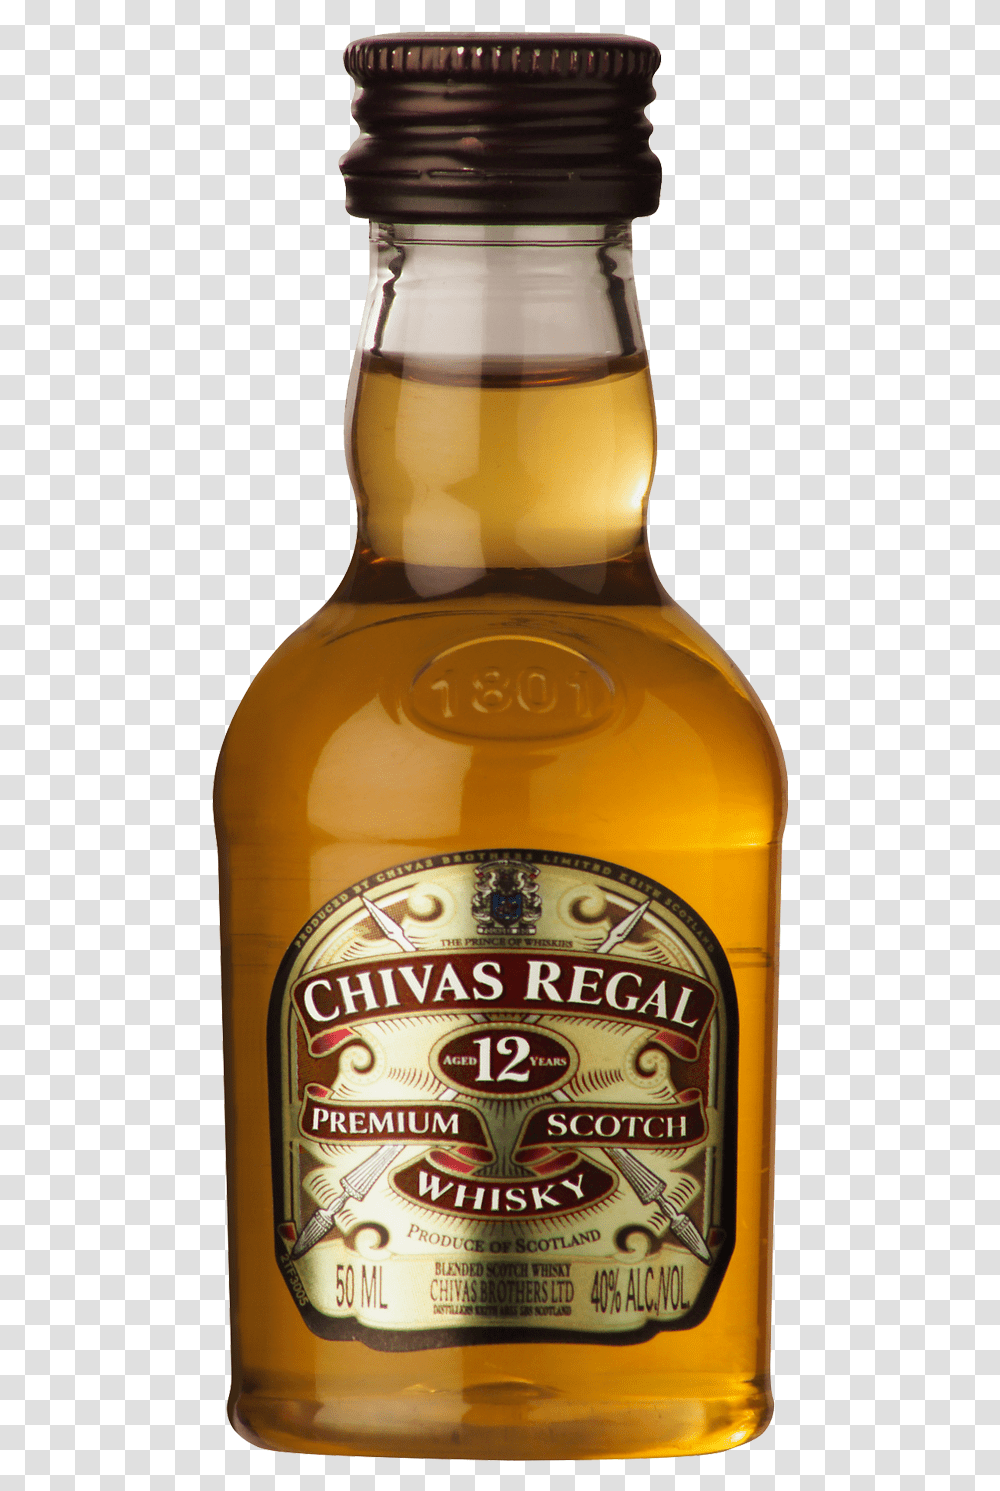 Details About Chivas Regal 12 Year Old Scotch Whisky 50 Ml Chivas Regal, Liquor, Alcohol, Beverage, Drink Transparent Png